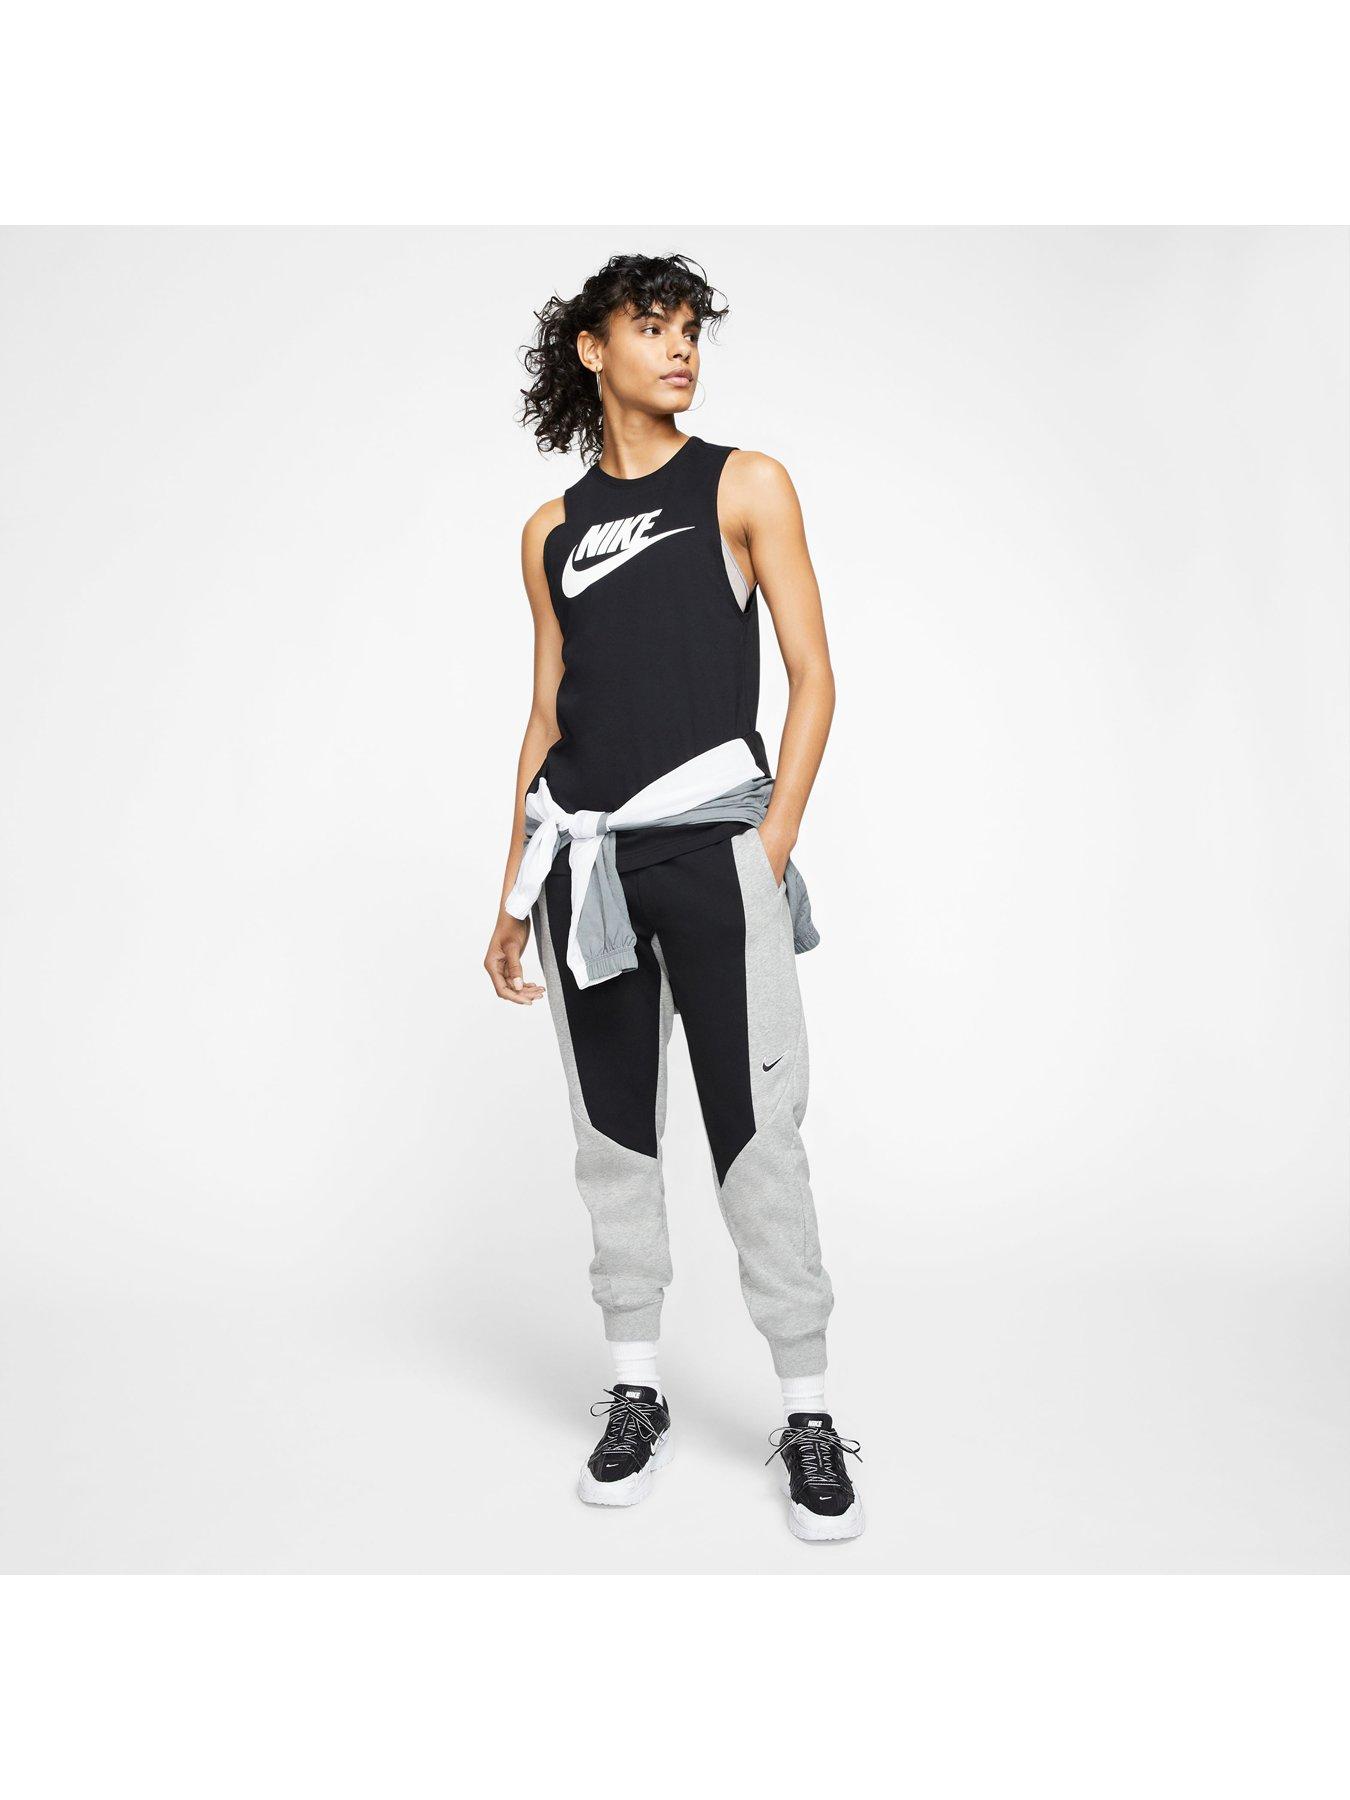 Nike Women's Futura Muscle Tank Top - BLACK/WHITE